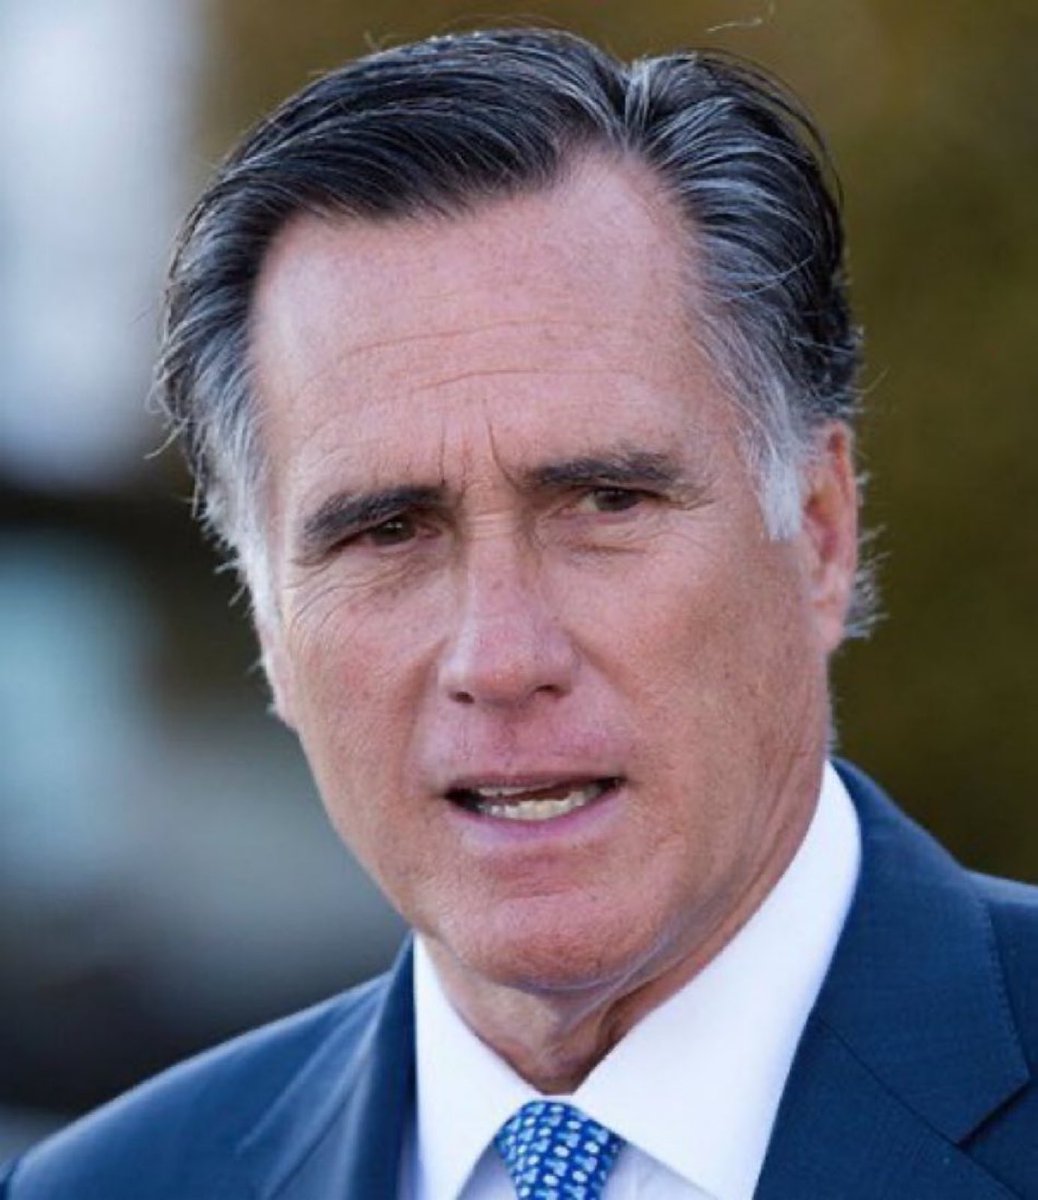 🚨BREAKING: Senator Mitt Romney is calling for aid to Ukraine. What’s your response?